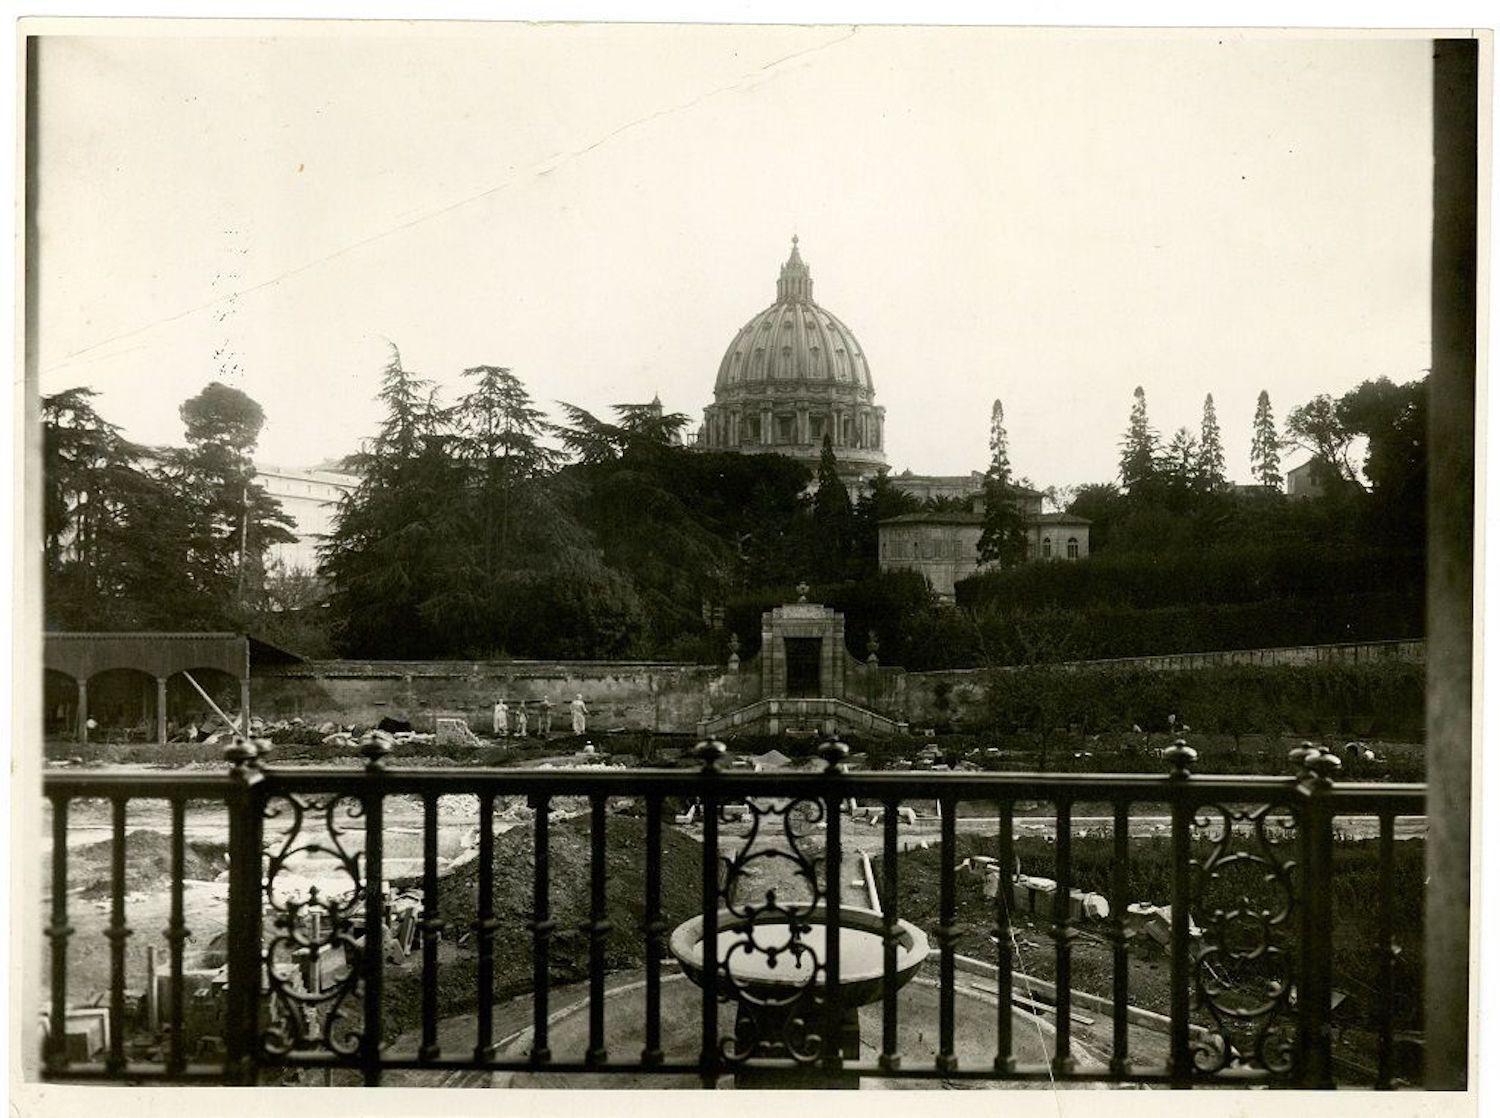 Giuseppe Felici Black and White Photograph - Vatican Square Garden - Vintage Photo by G. Felici - 1931